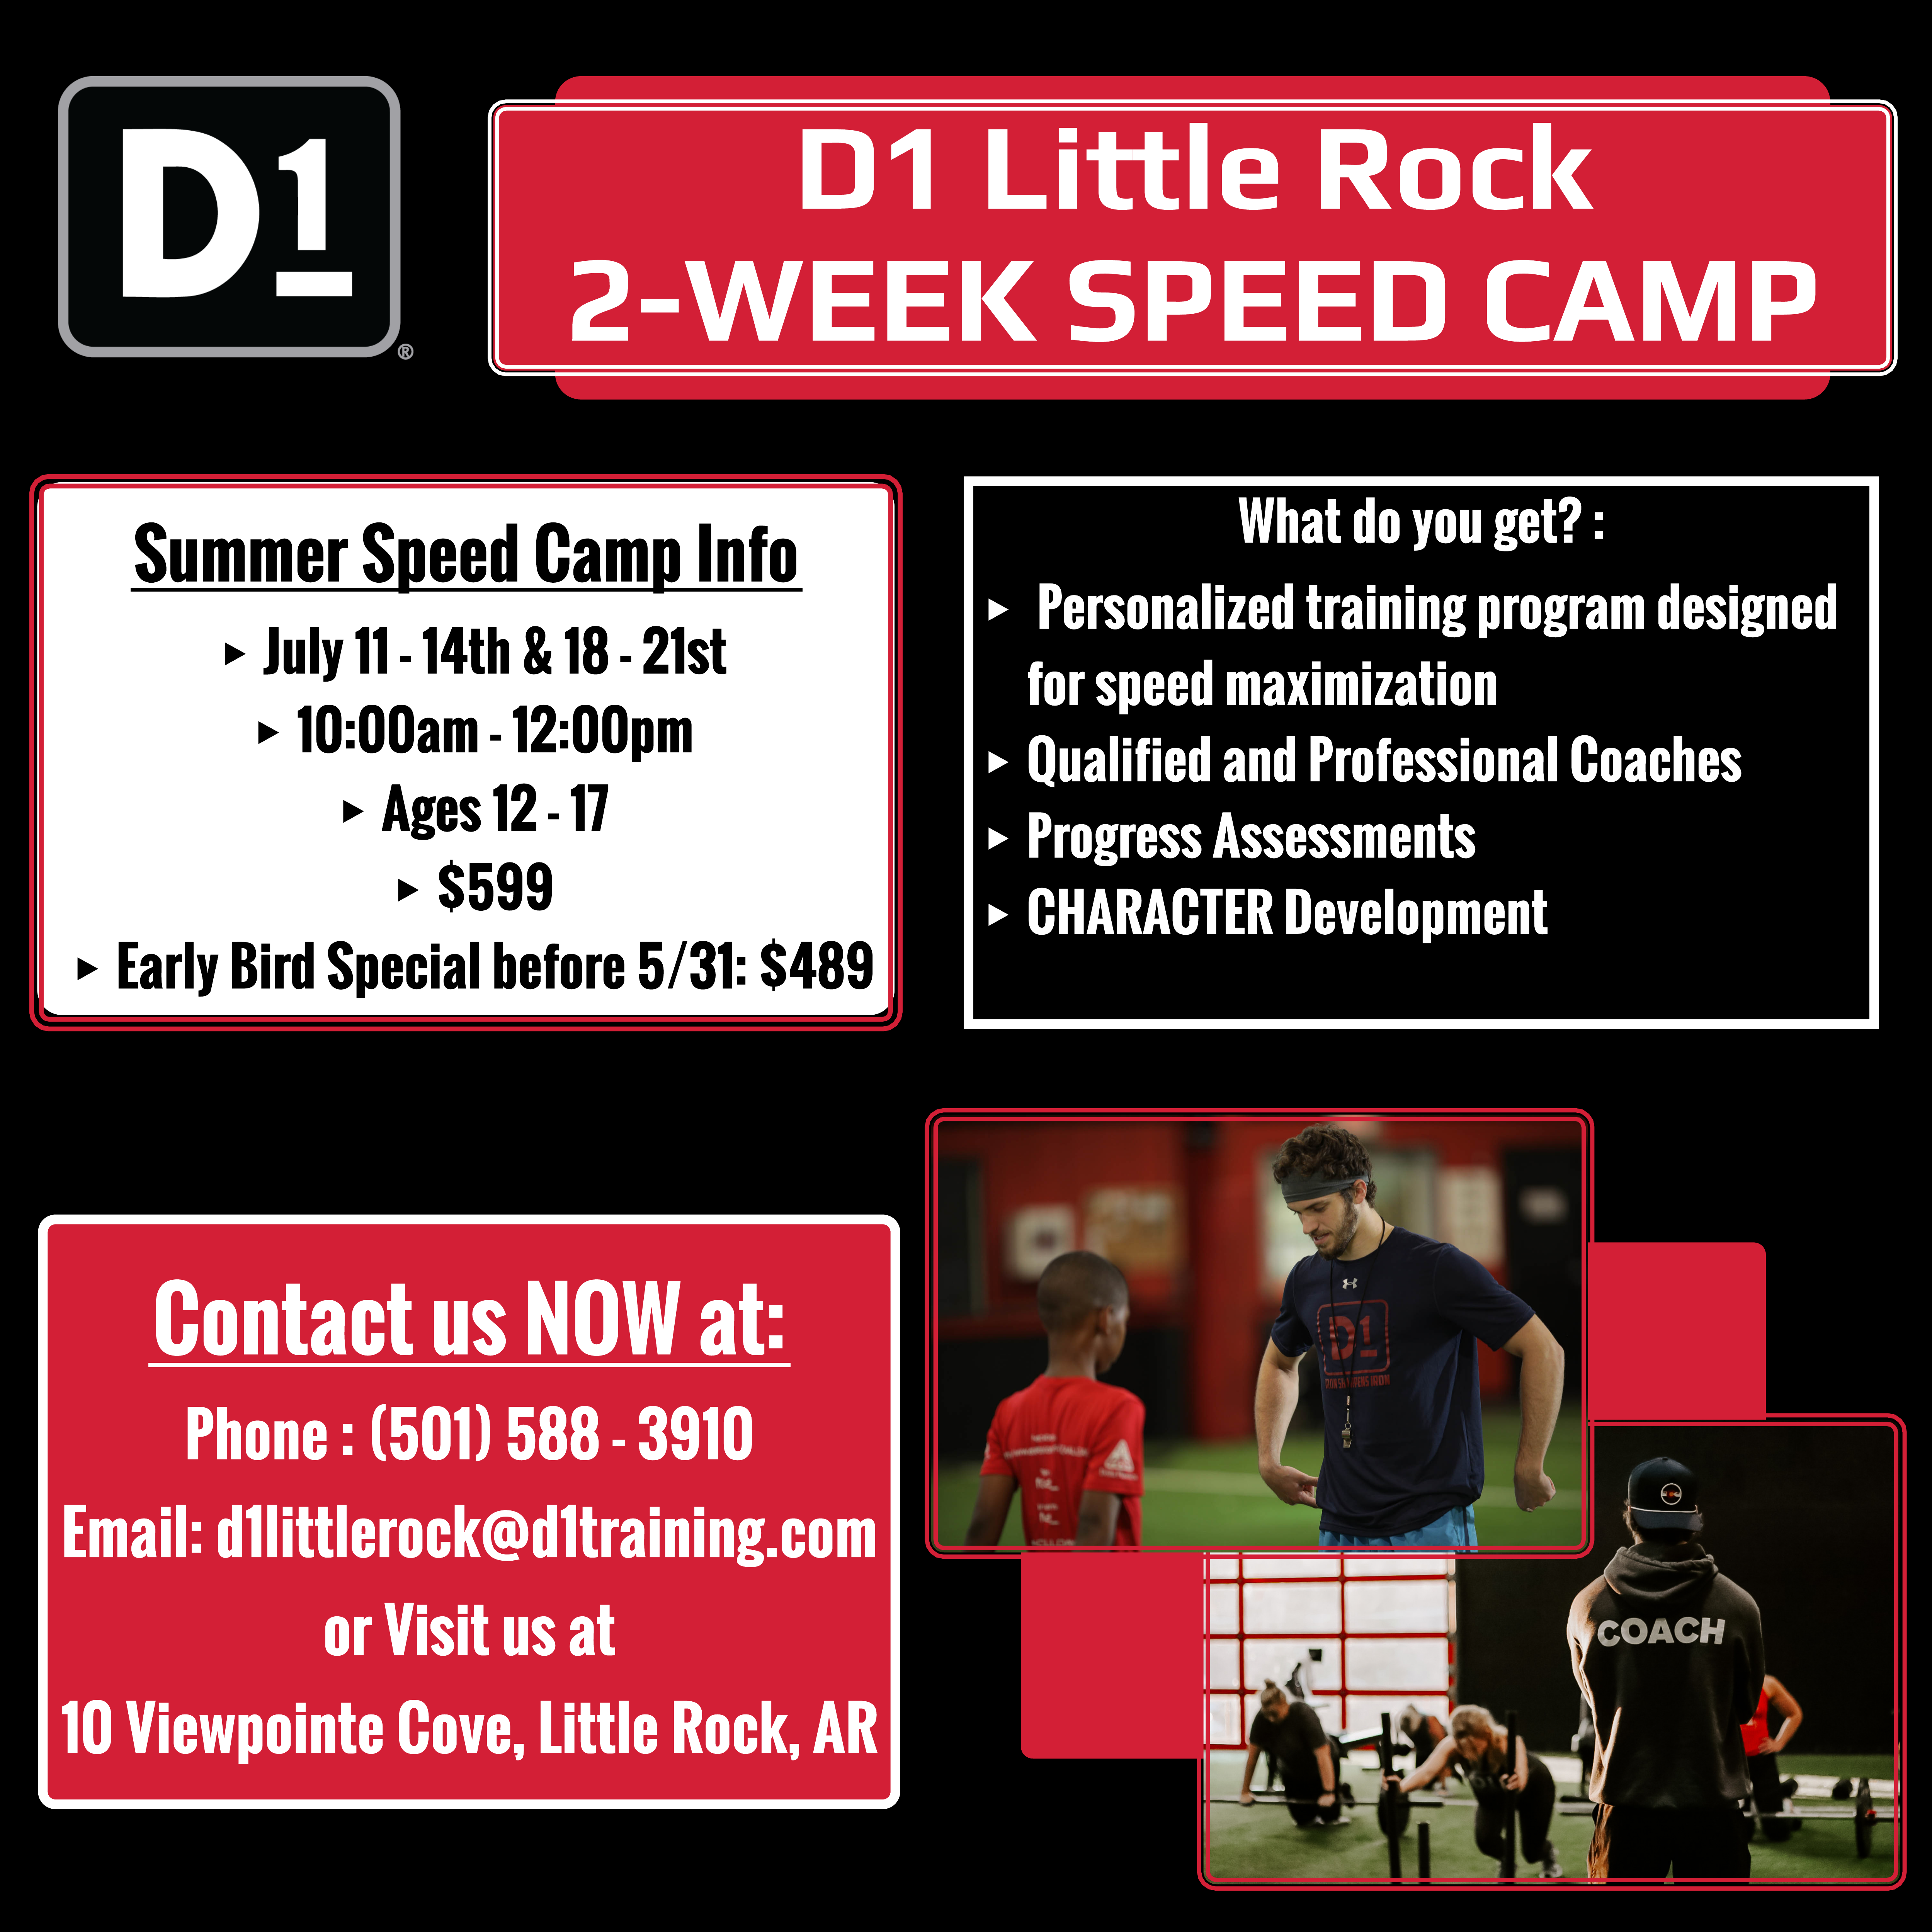 D1 Little Rock: 2-week speed camp